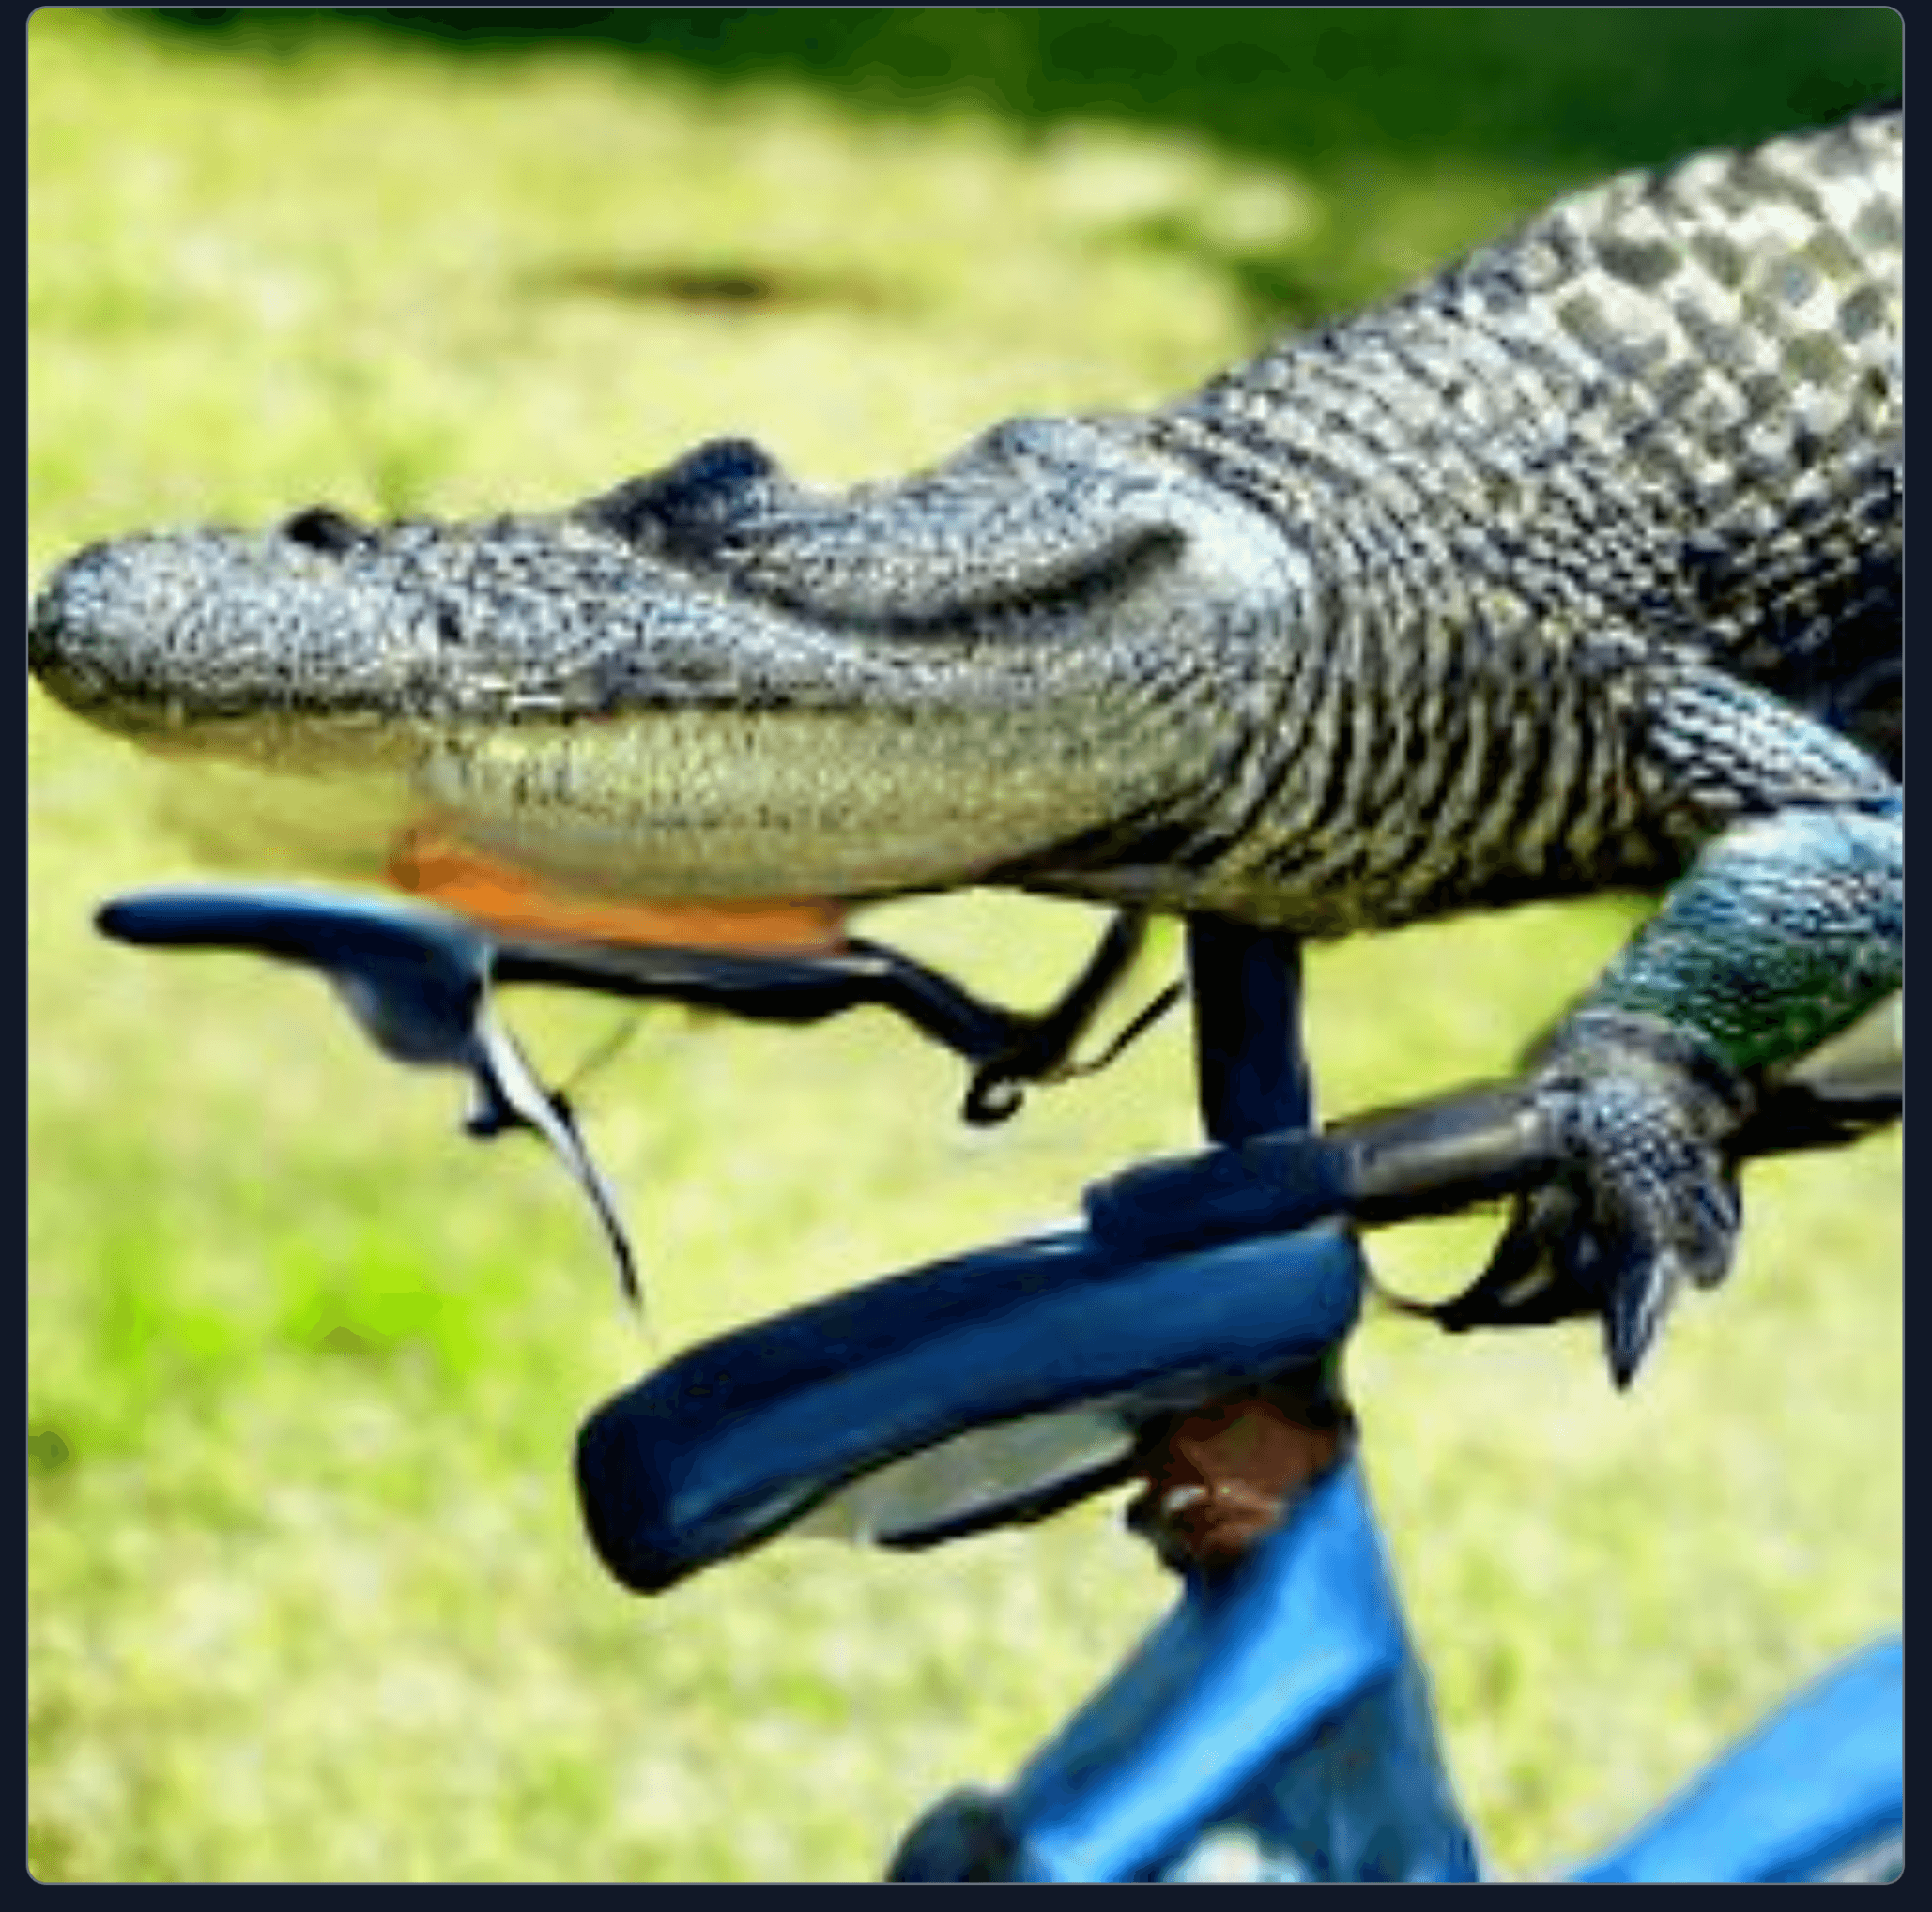 Craiyon 101821 alligator standing on a bicycle seat